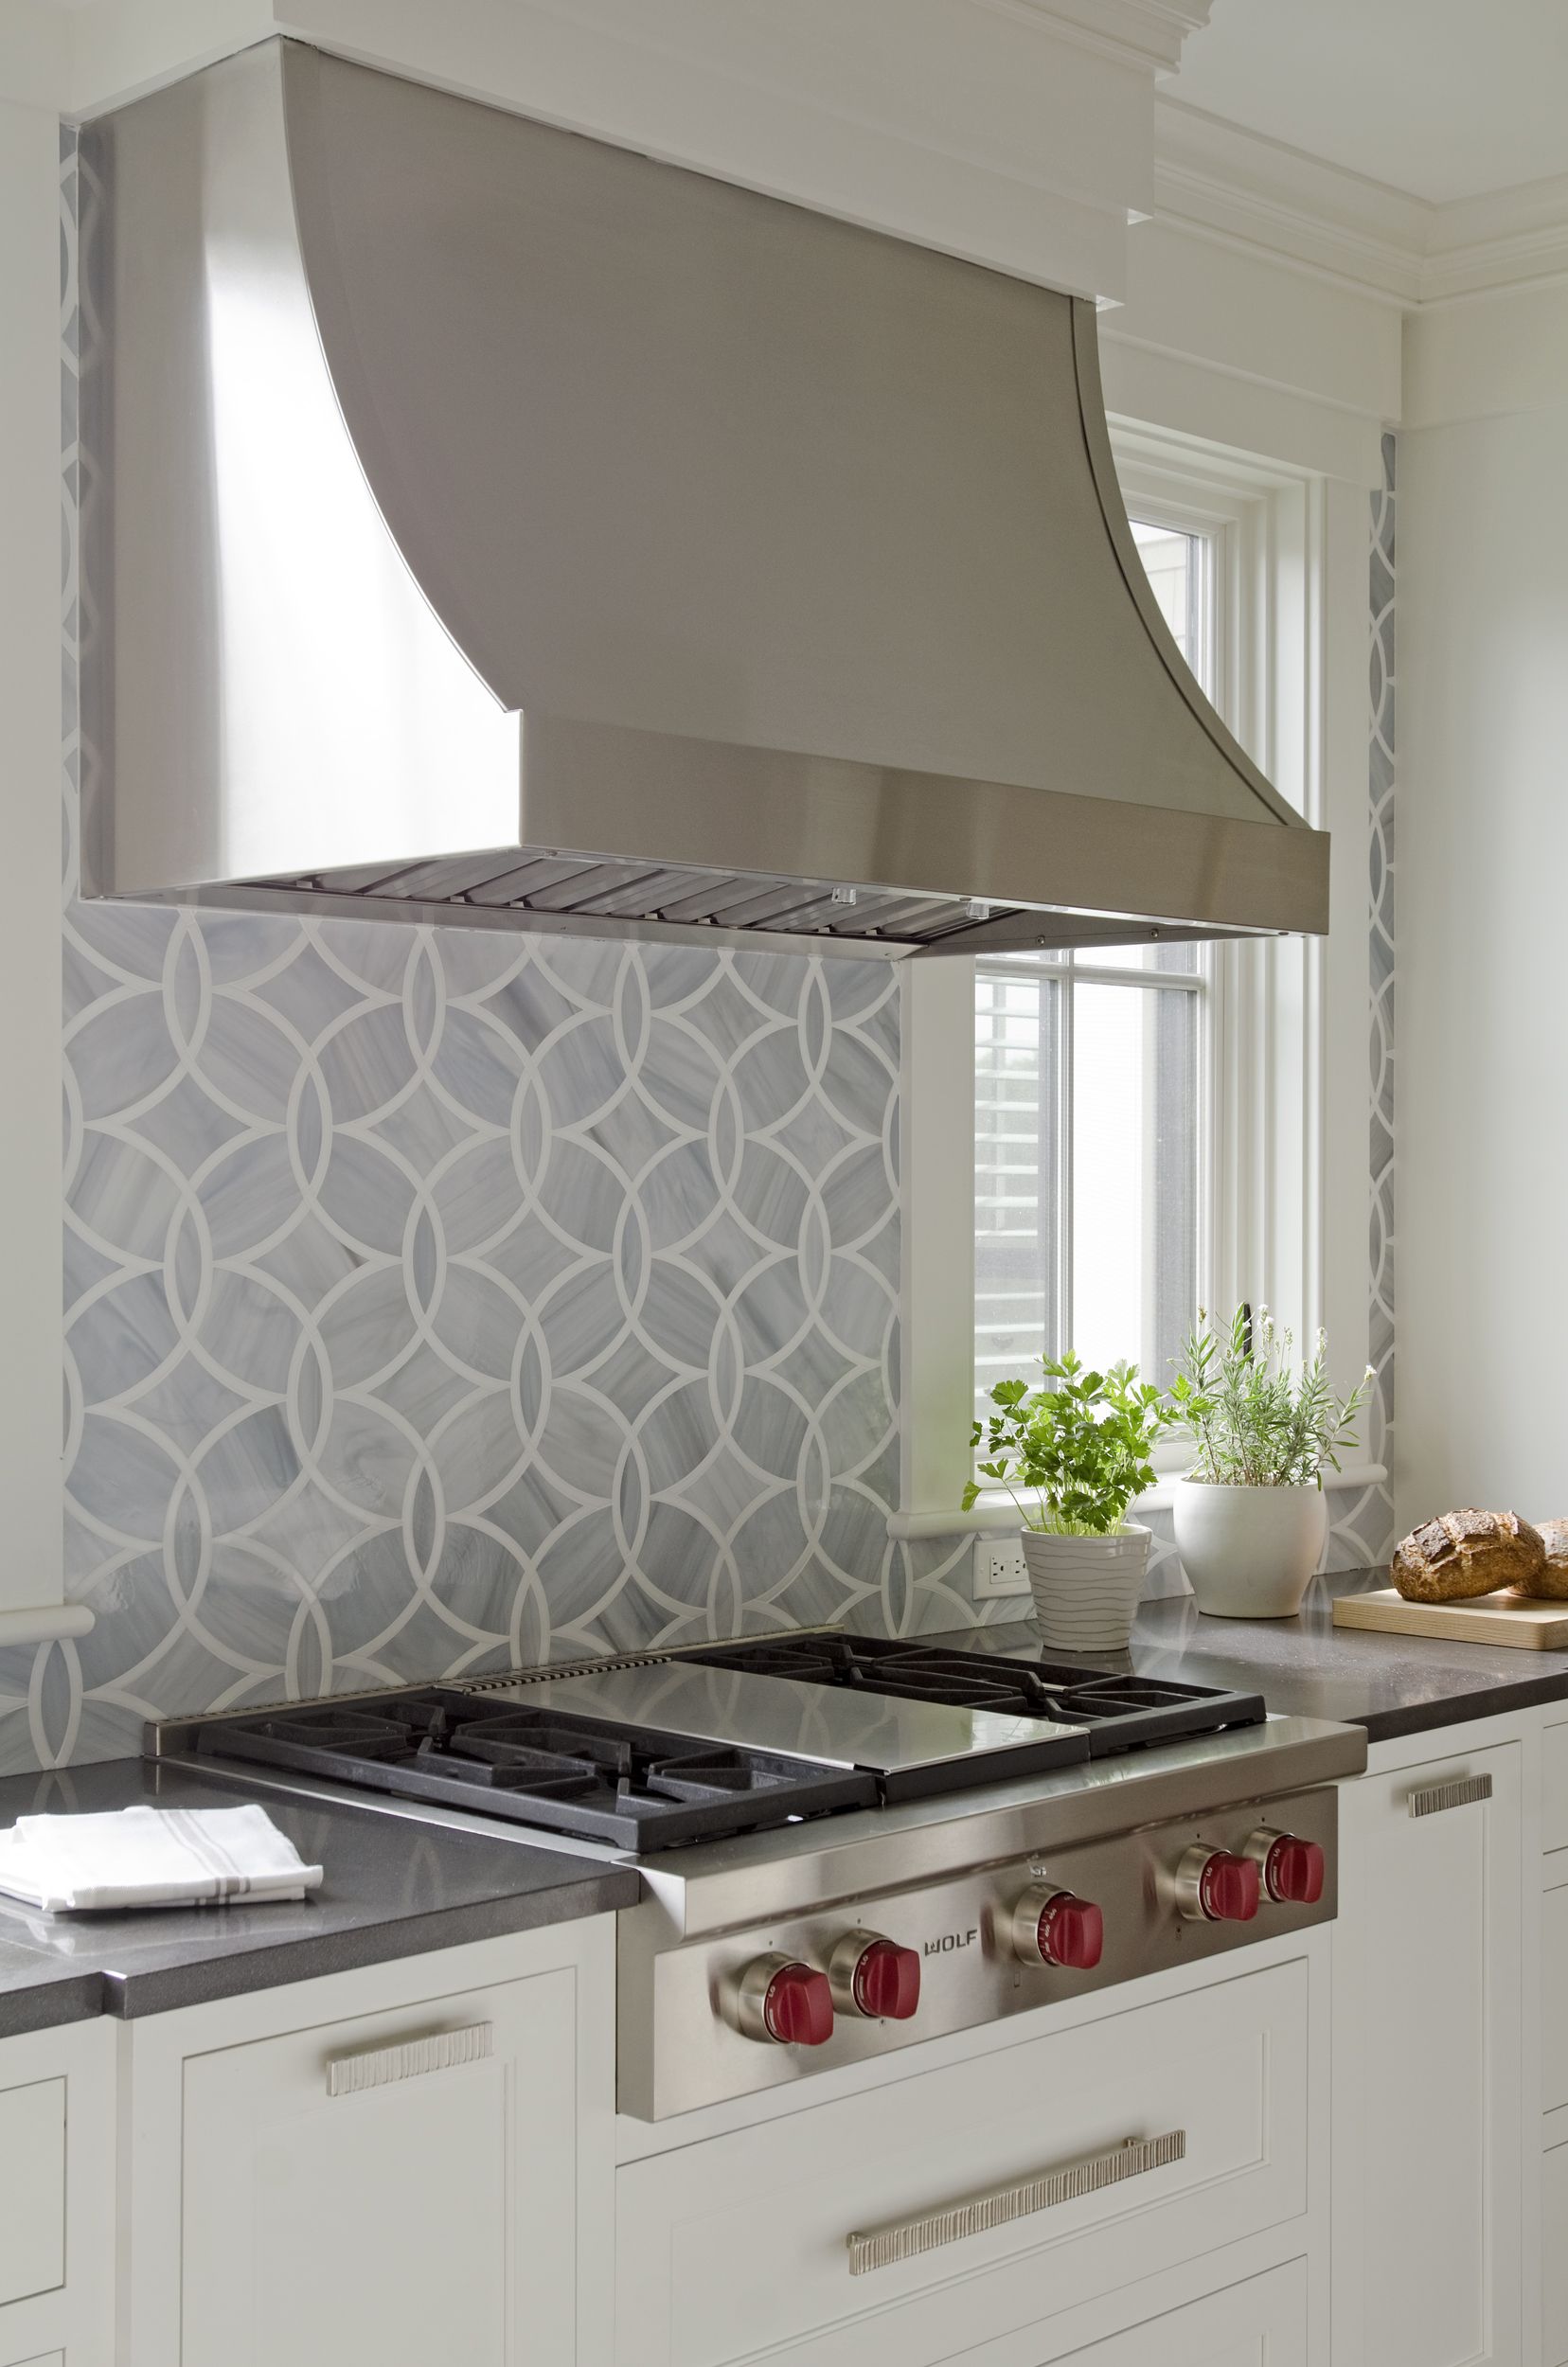 Creative Geometric Kitchen Backsplashes, Geometric Tile Backsplash